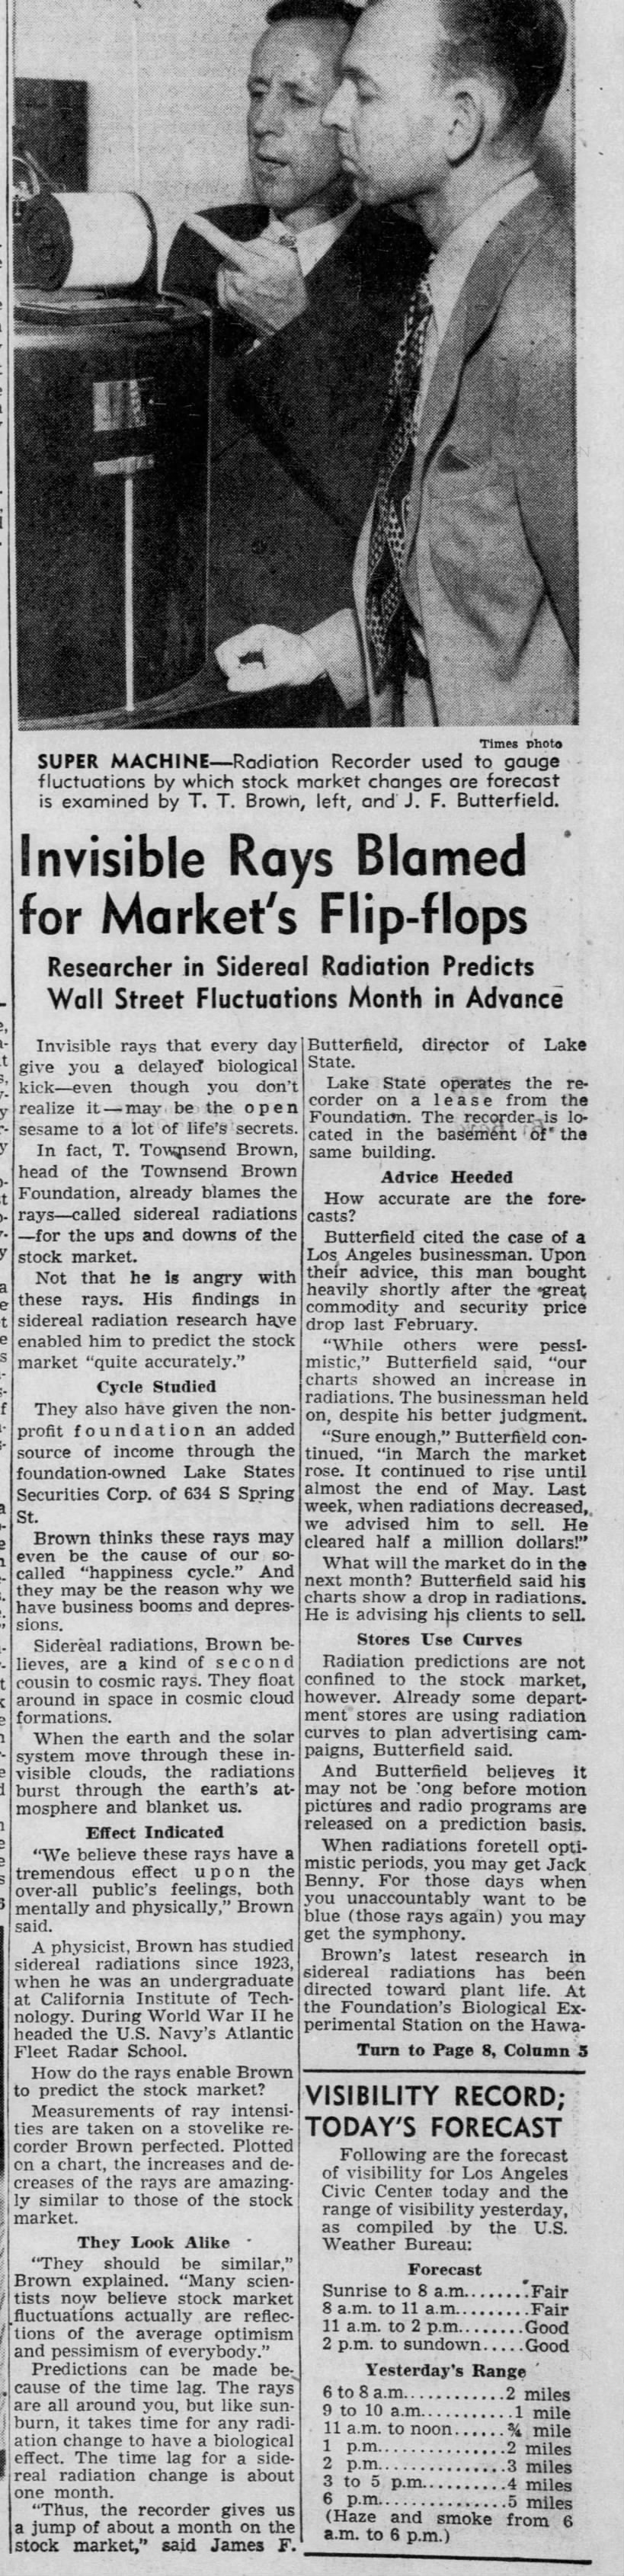 Brown Radiation stock market predictor P. 1 Jul 1948